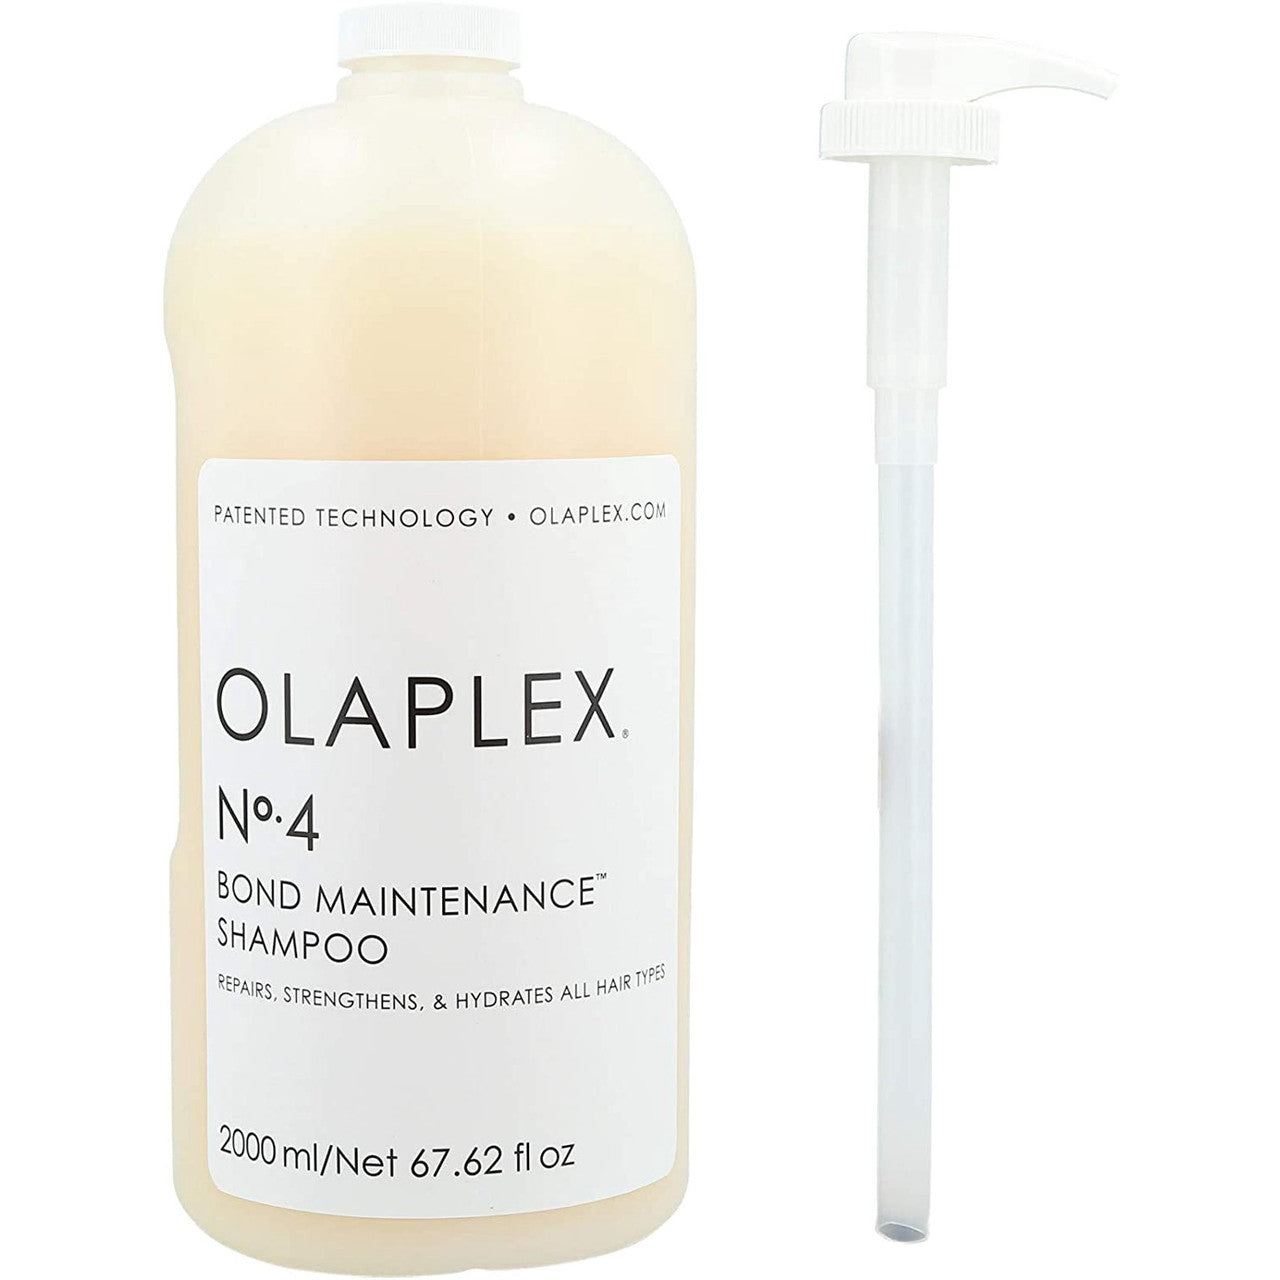 OLAPLEX Bond Maintenance Shampoo 67.62oz